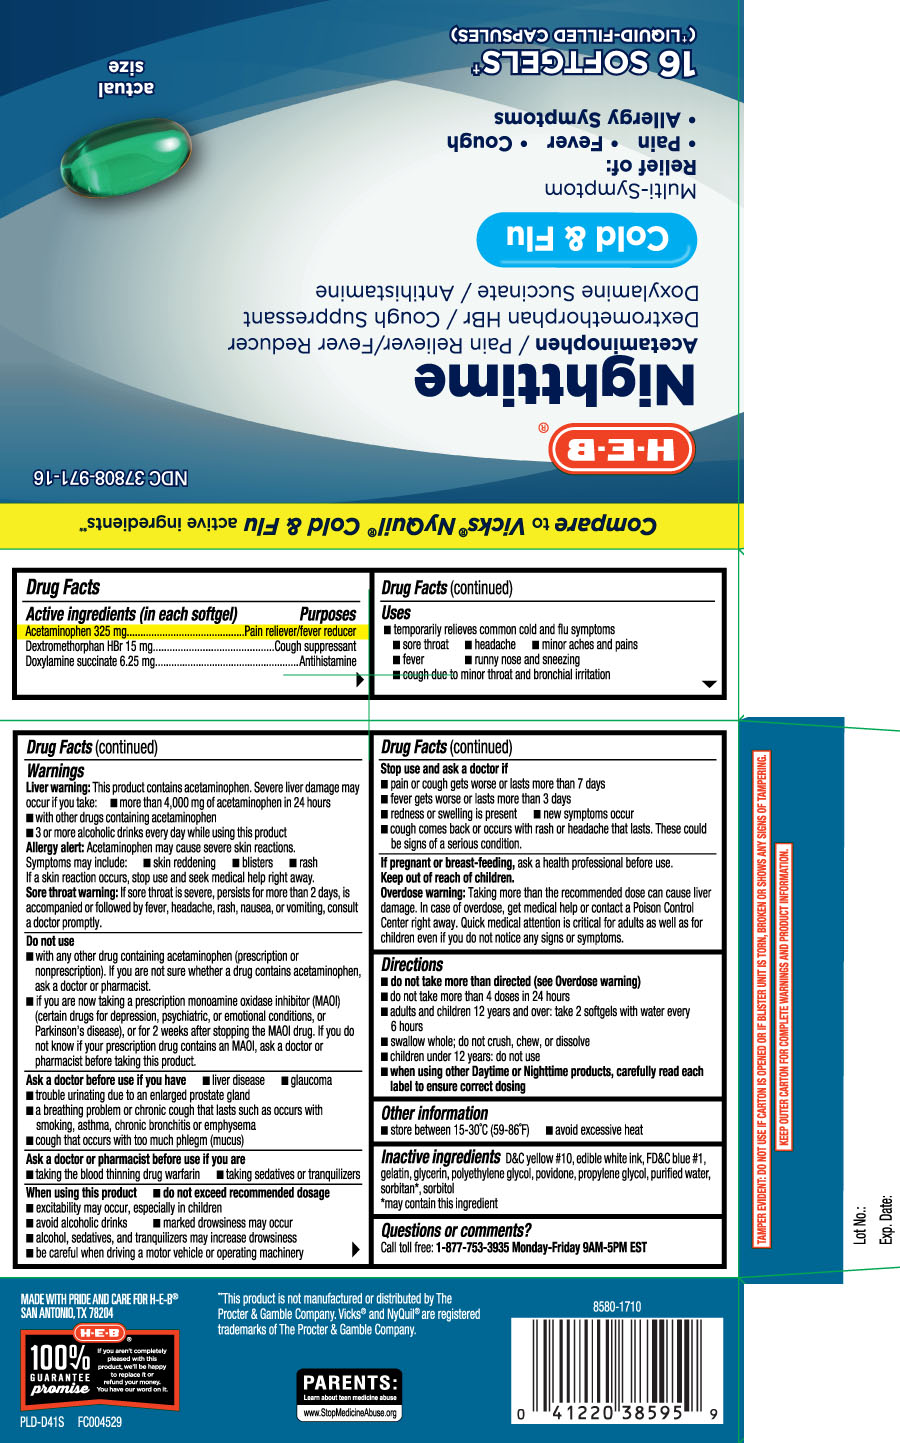 Acetaminophen 325 mg, Dextromethorphan HBr 15 mg, Doxylamine Succinate 6.25 mg